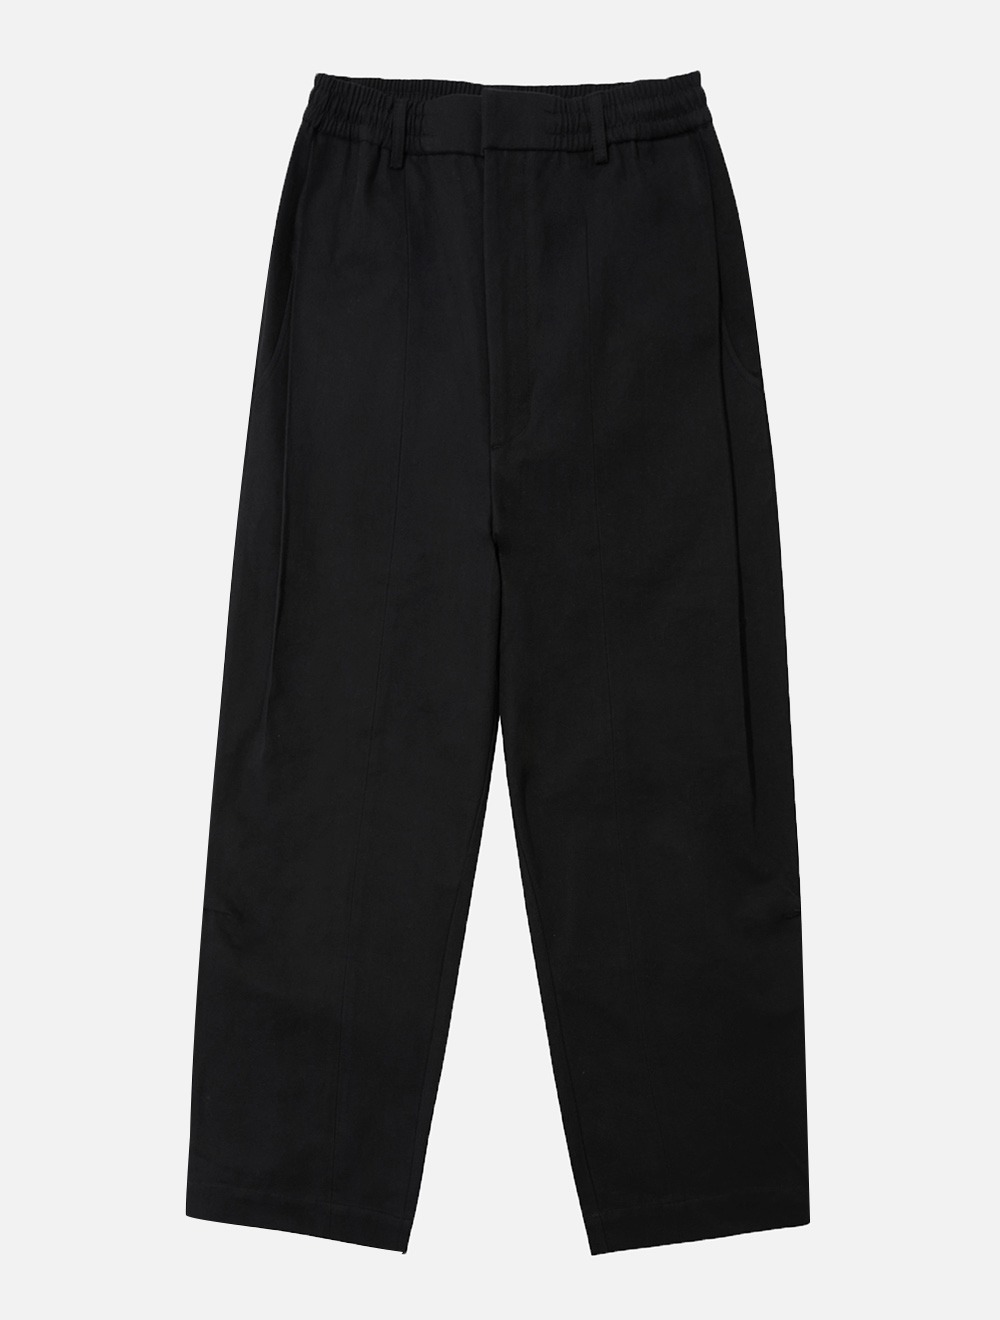 wide banding pants (black)